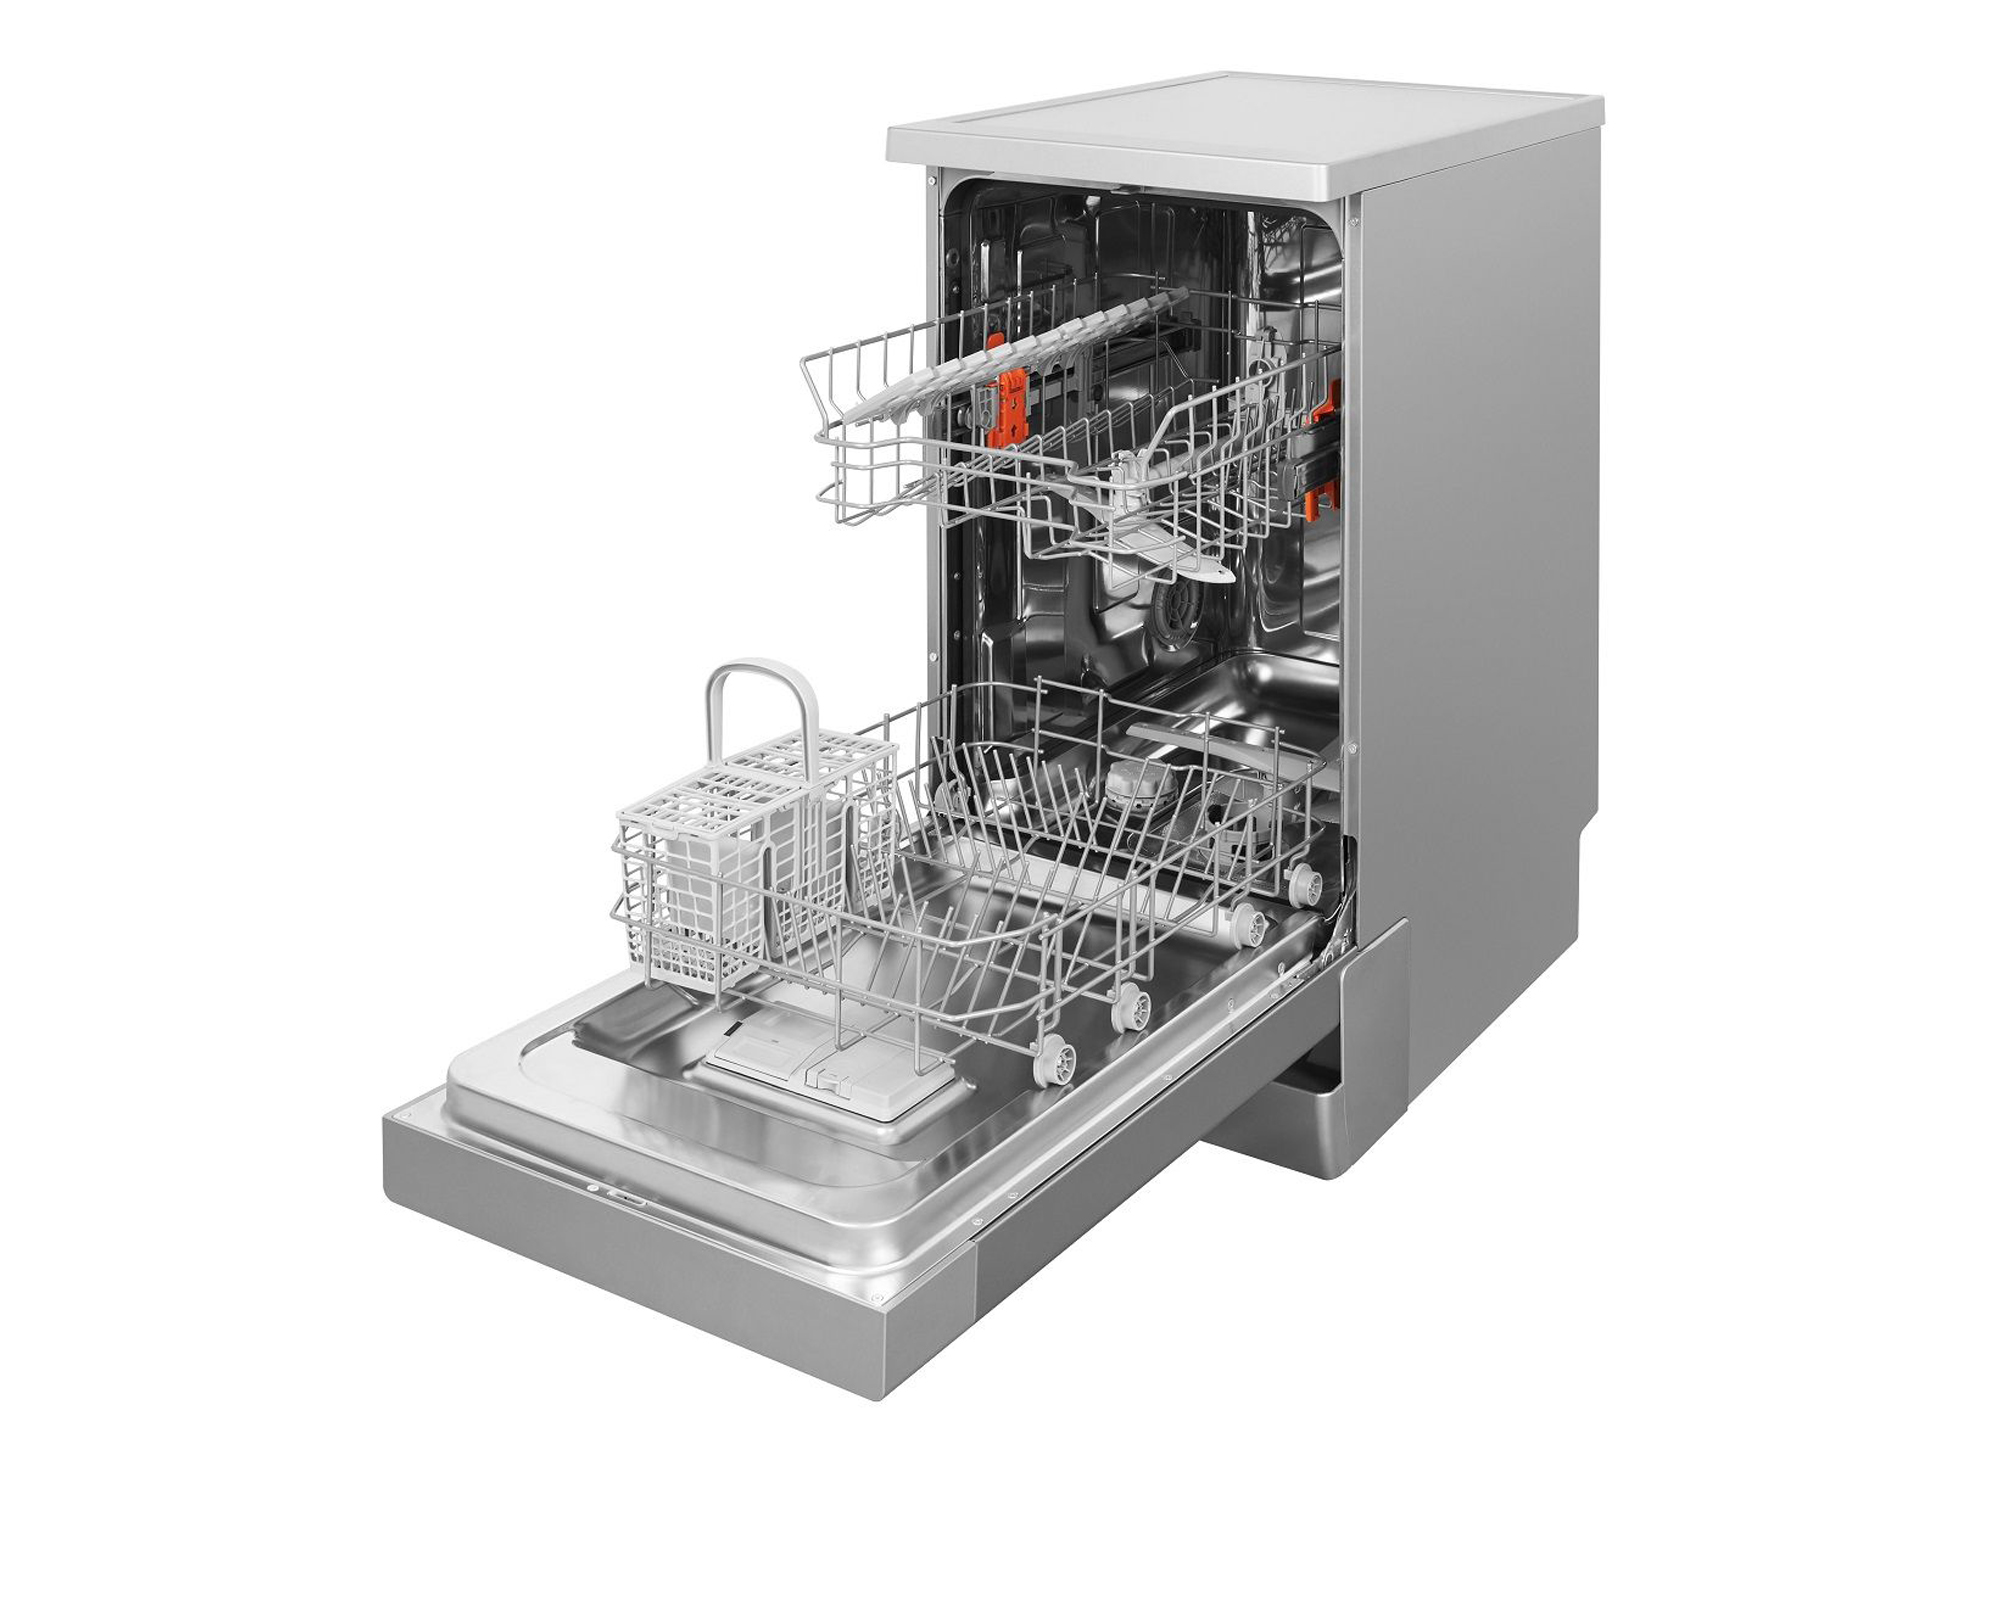 freestanding slimline dishwasher